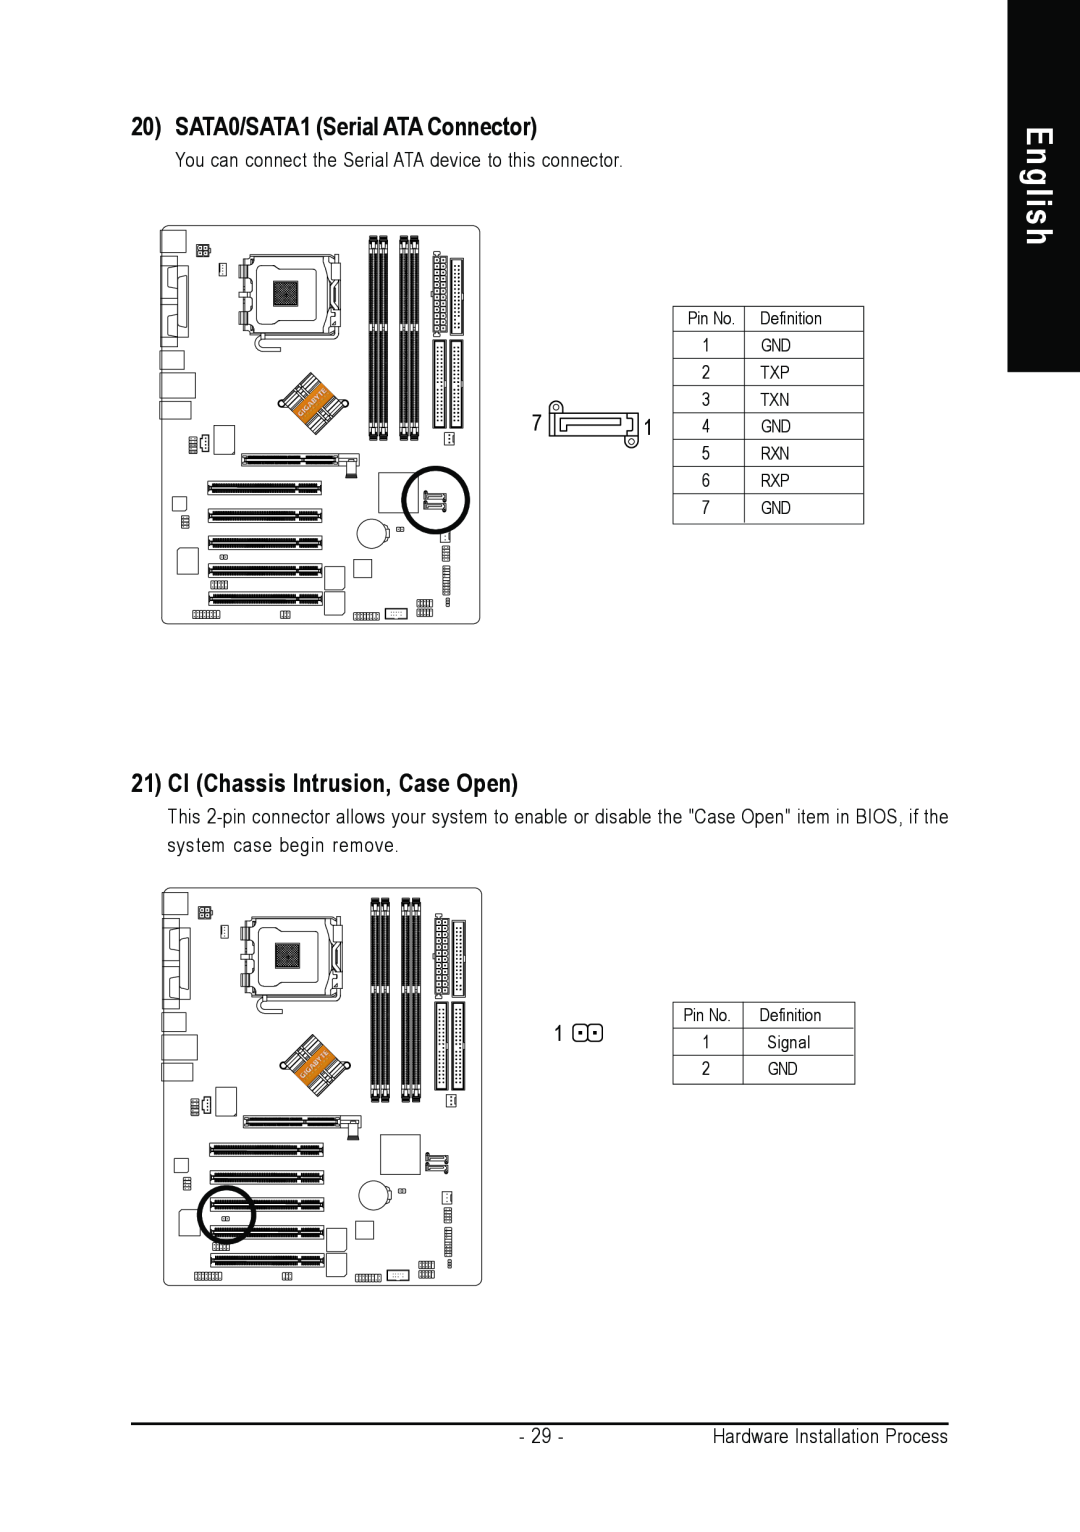 Gigabyte AGP 4X/8X manual English, SATA0/SATA1 Serial ATA Connector, CI Chassis Intrusion, Case Open 